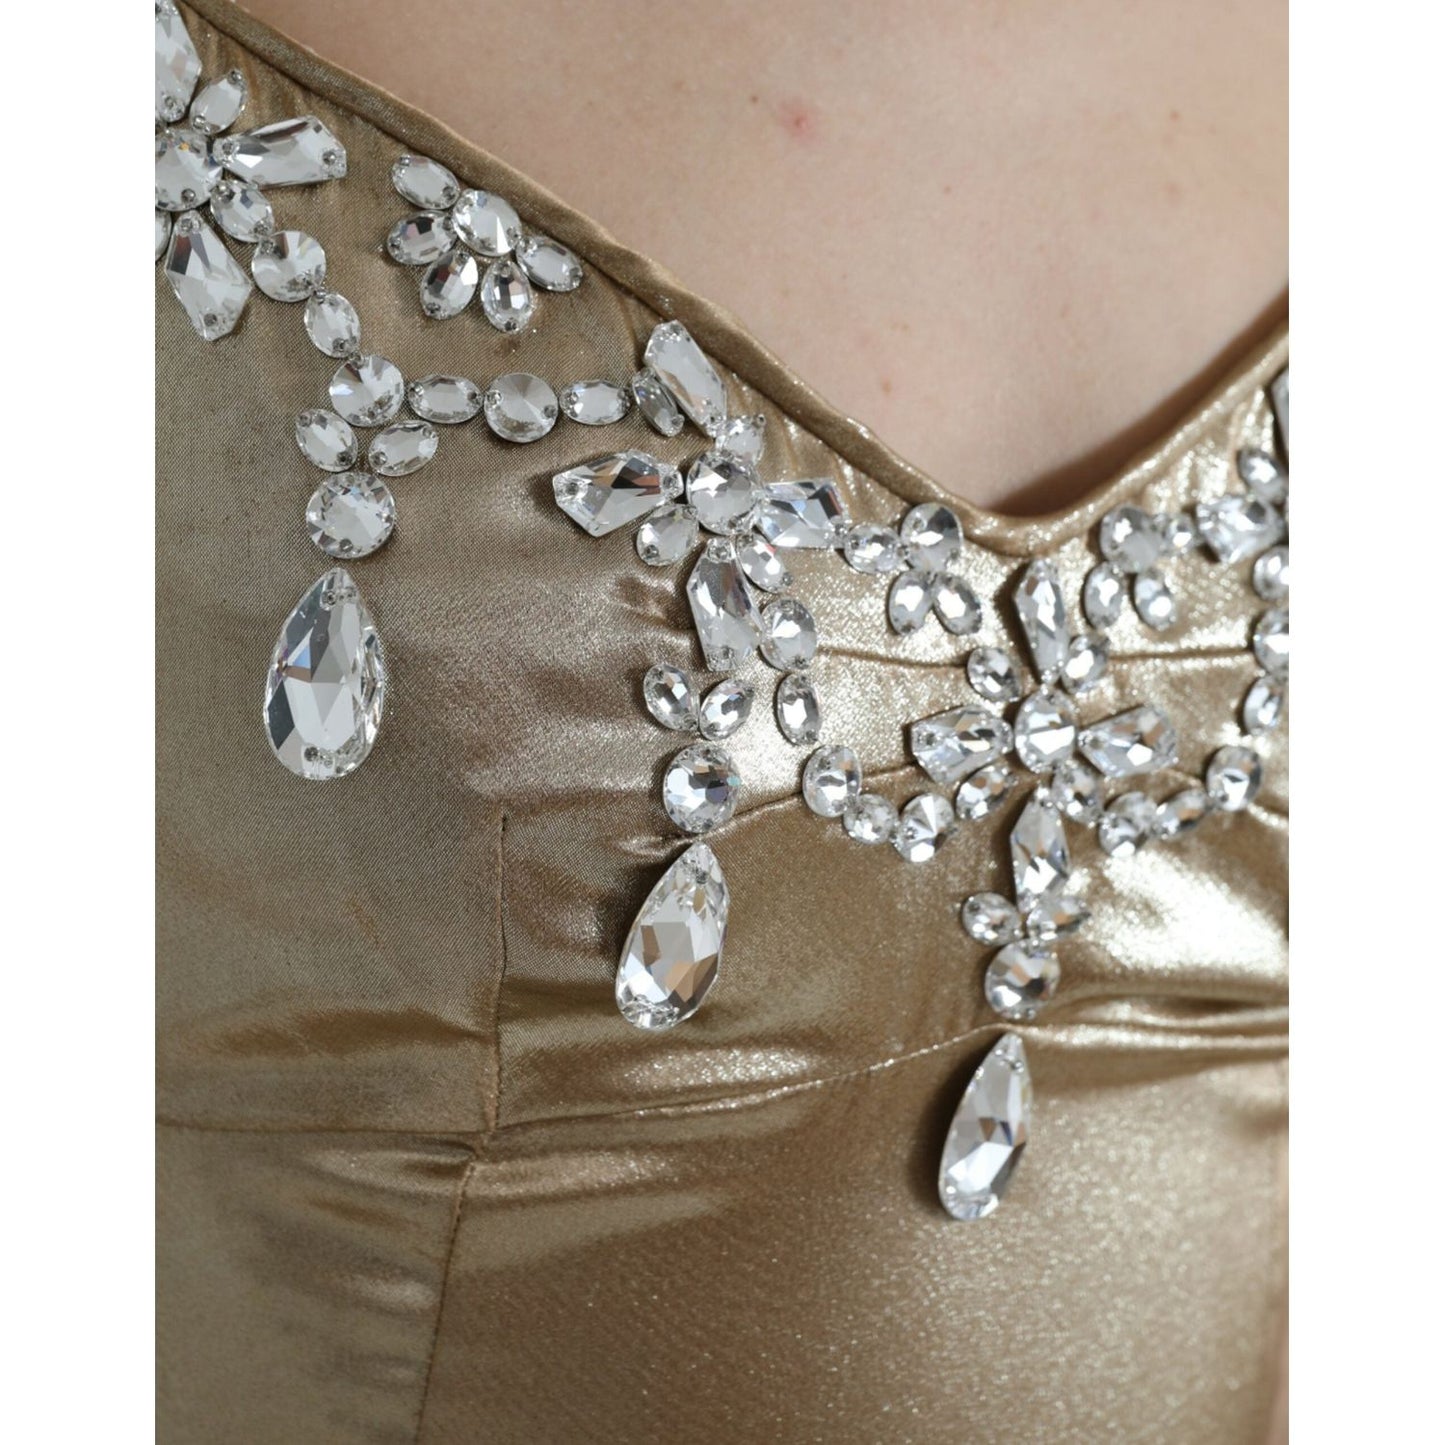 Dolce & Gabbana | Elegant Metallic Gold Sheath Dress with Crystals| McRichard Designer Brands   